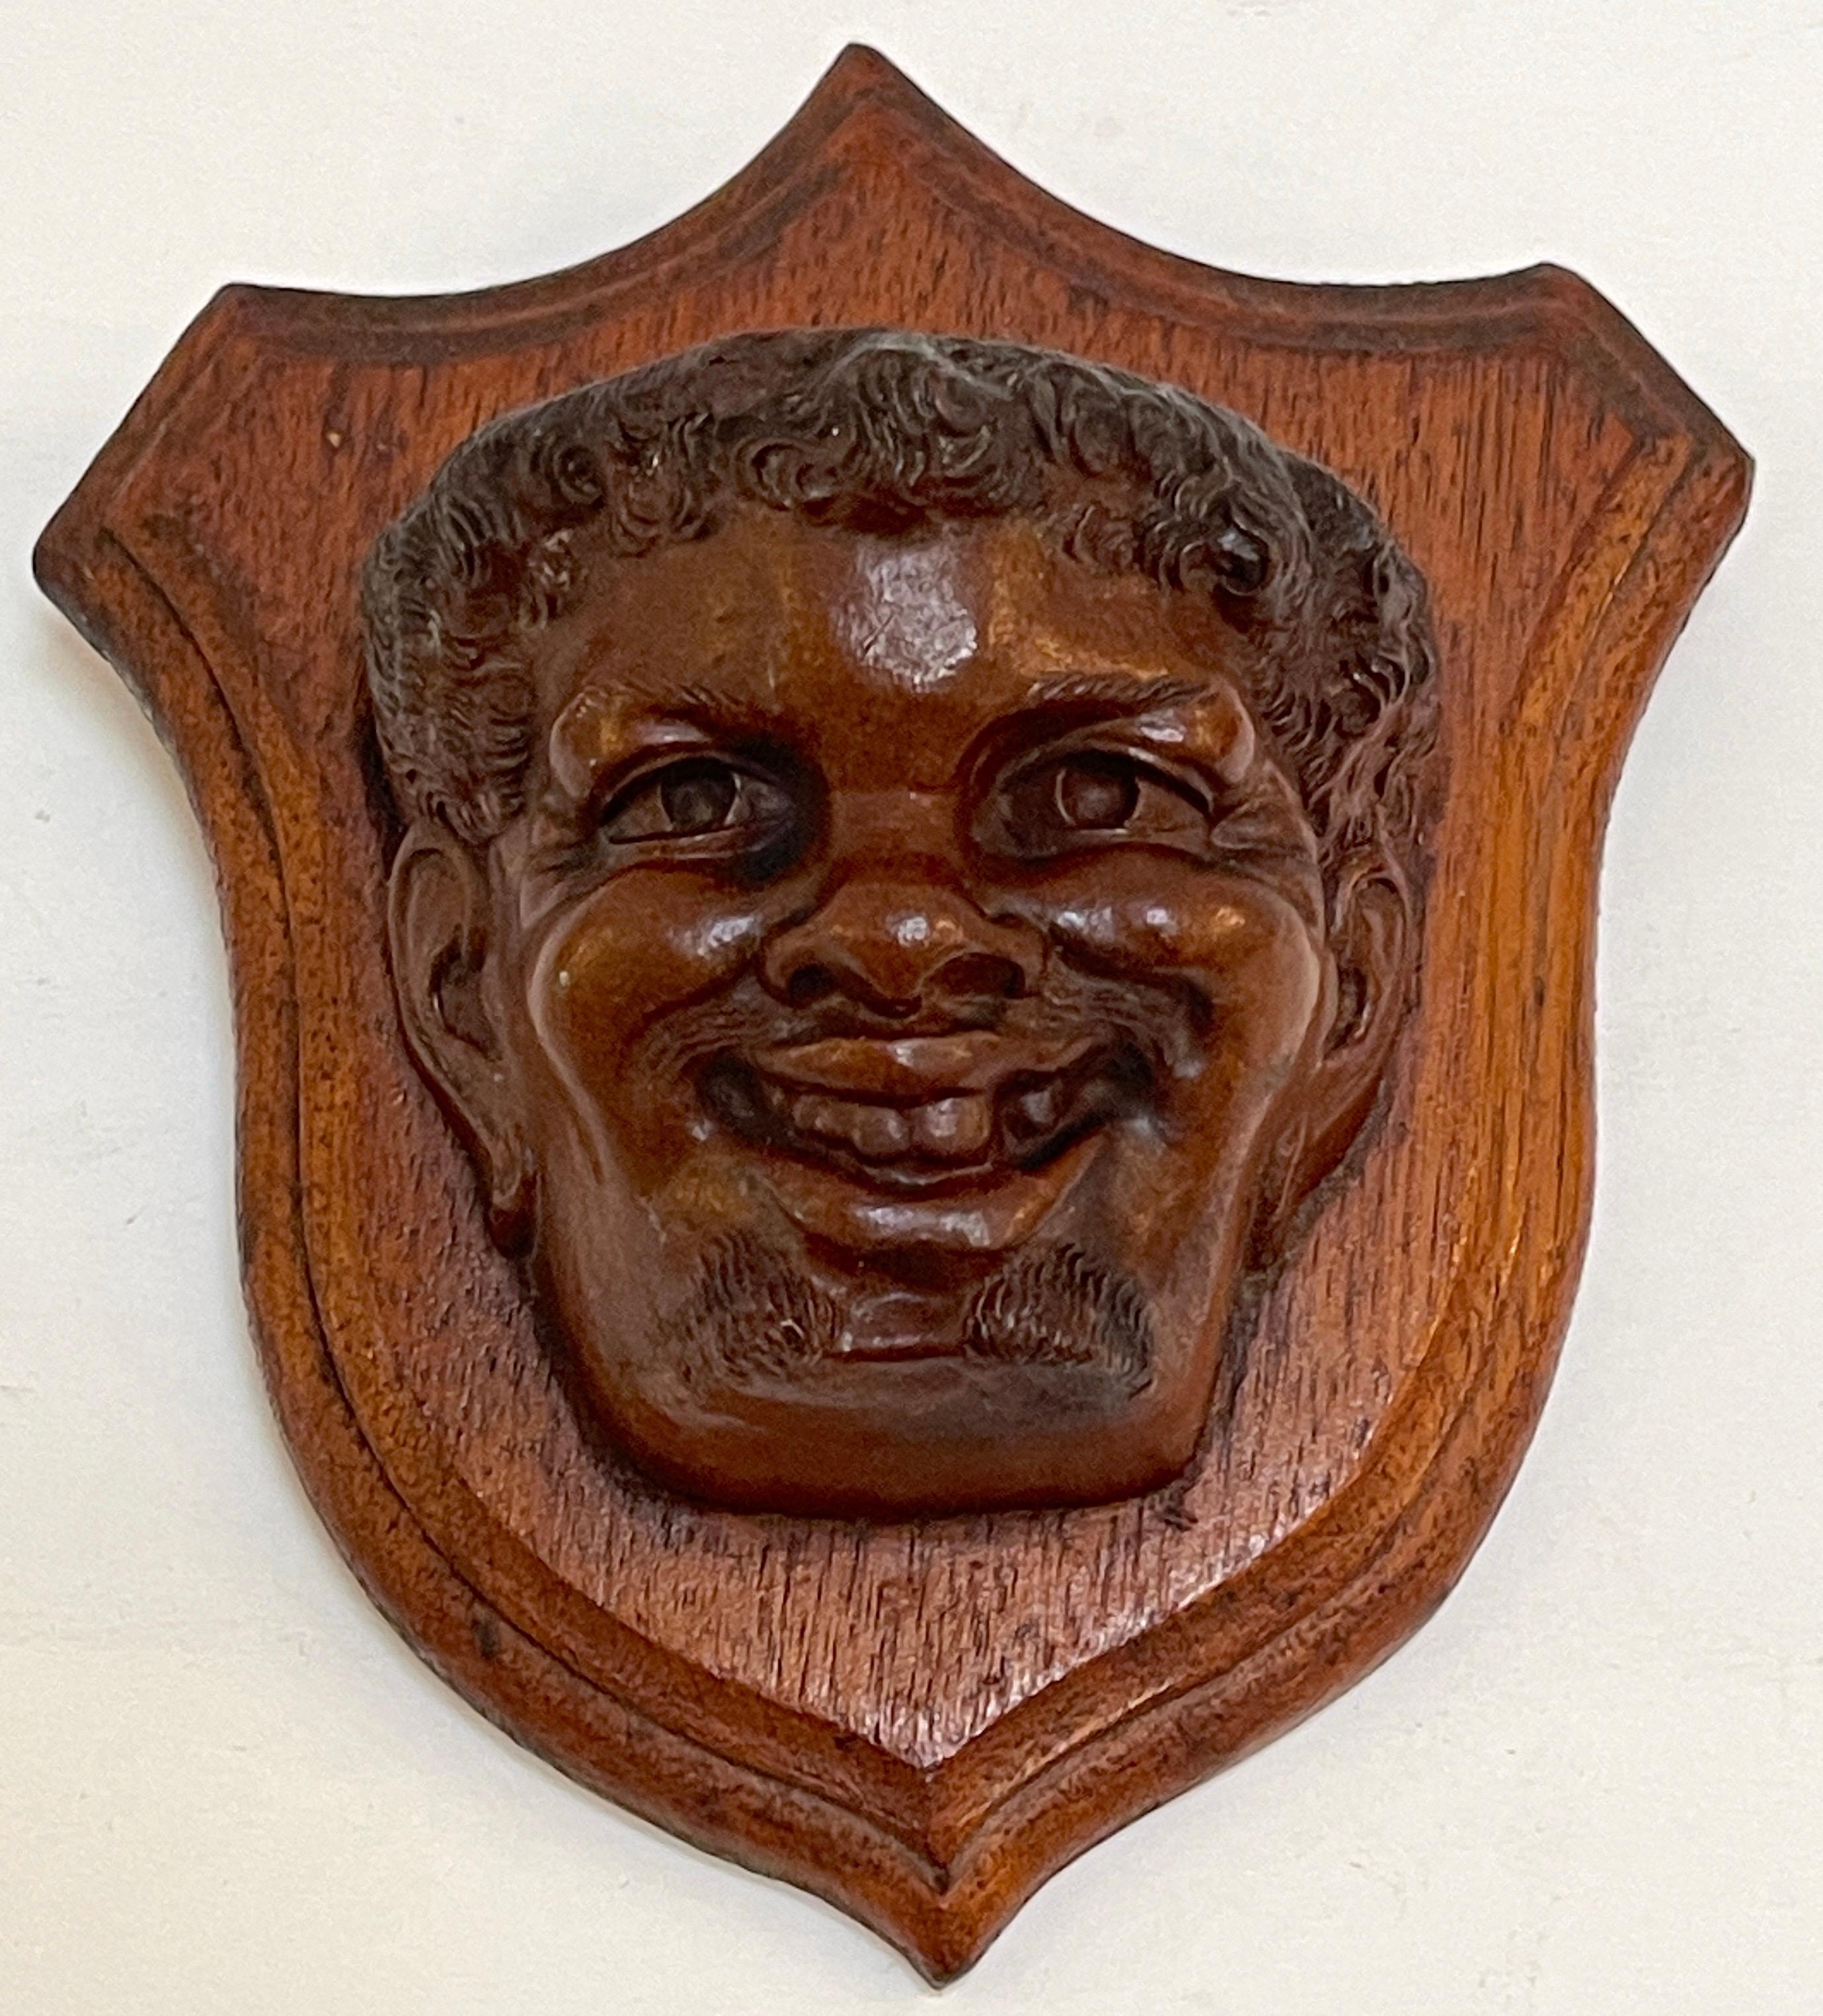 19th Century Black Forrest Carved Black Walnut Toothless Man Motif Hanging Match Holder For Sale